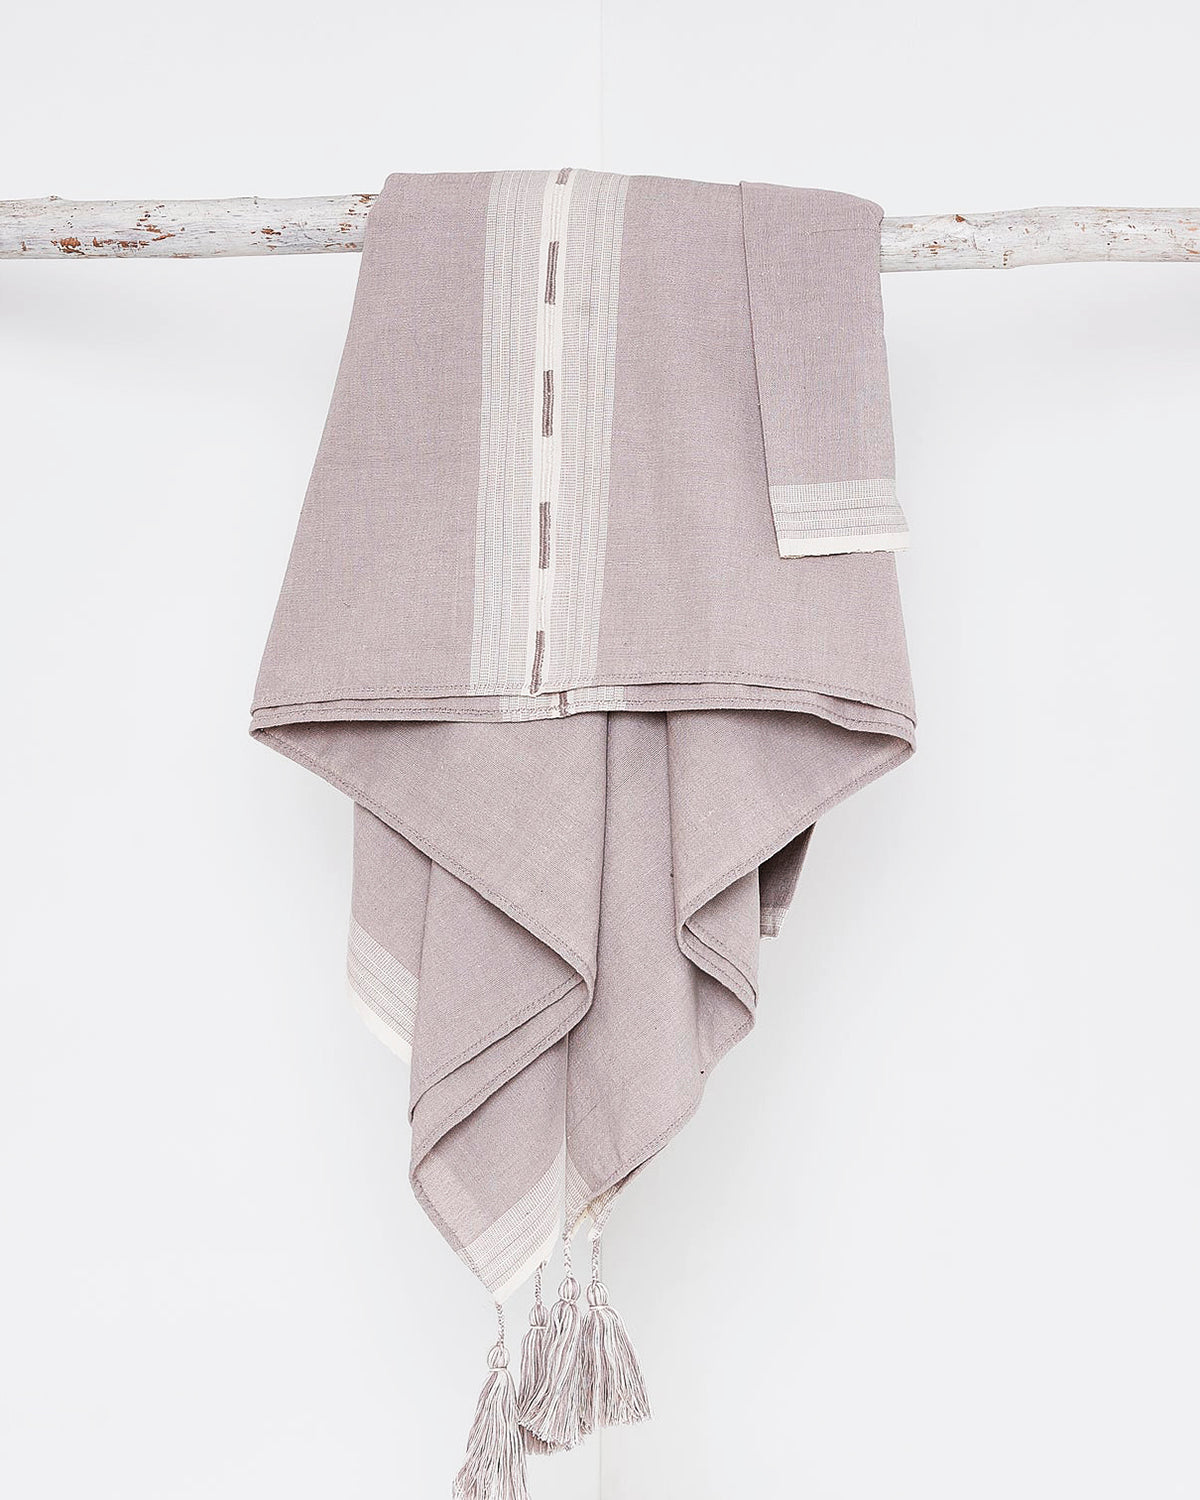 SALE SanCri Handmade Cotton Tablecloth in Gray and White